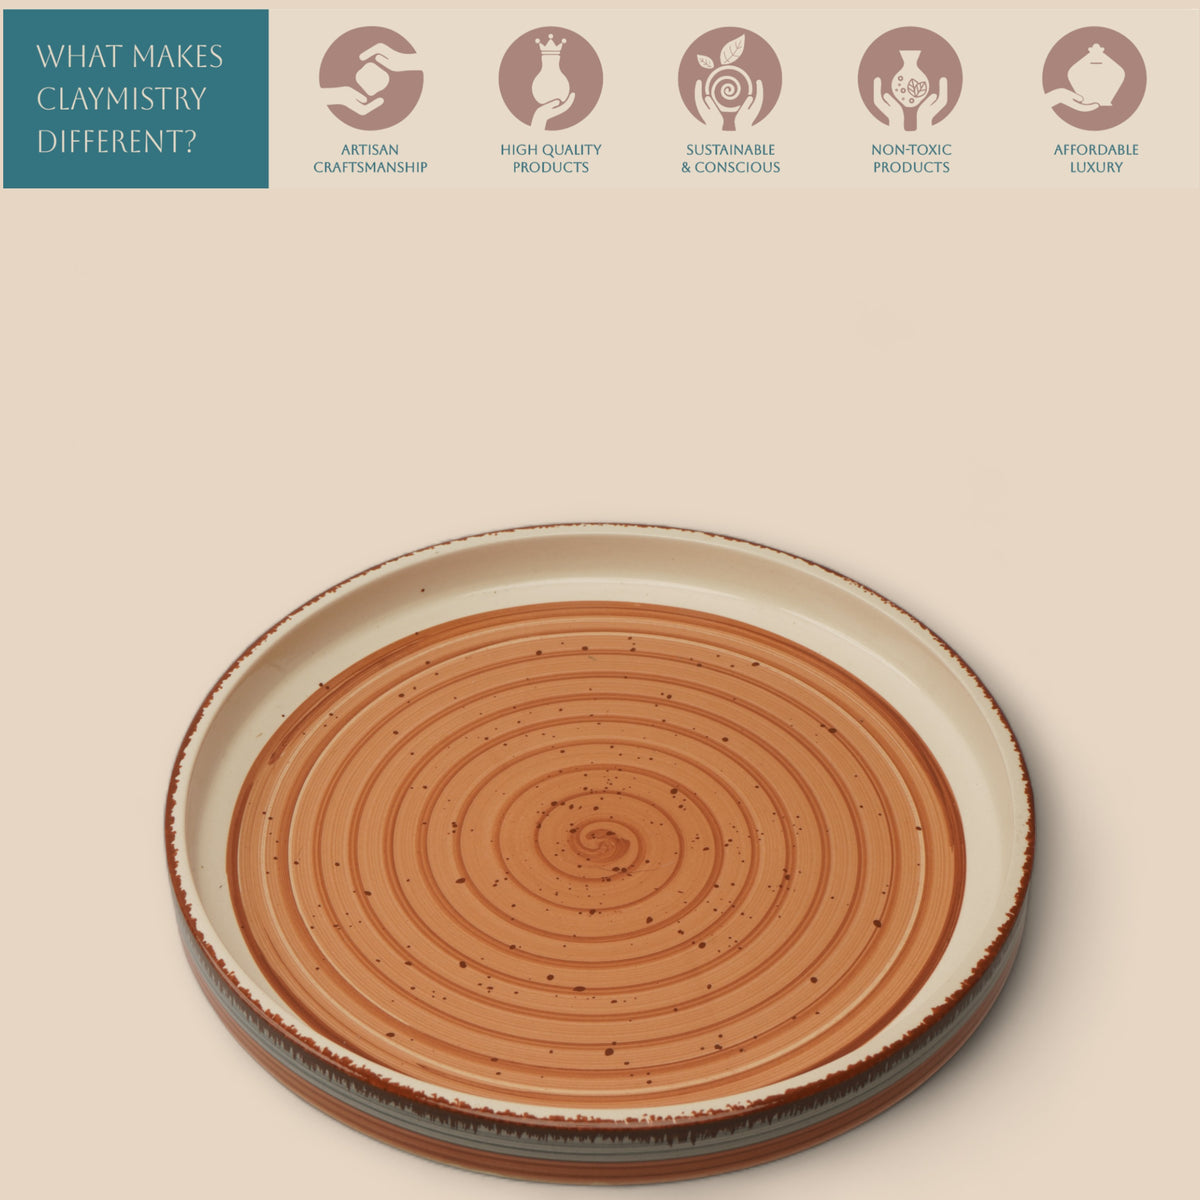 Claymistry Ceramic Dinner & Snacks Orange & White with Swirl Print Round Tray, Set of 1 | 30cm * 30cm * 3cm | Glossy | Dishwasher & Microwave Safe | Dinnerware Serving Platter Thali | Premium Crockery